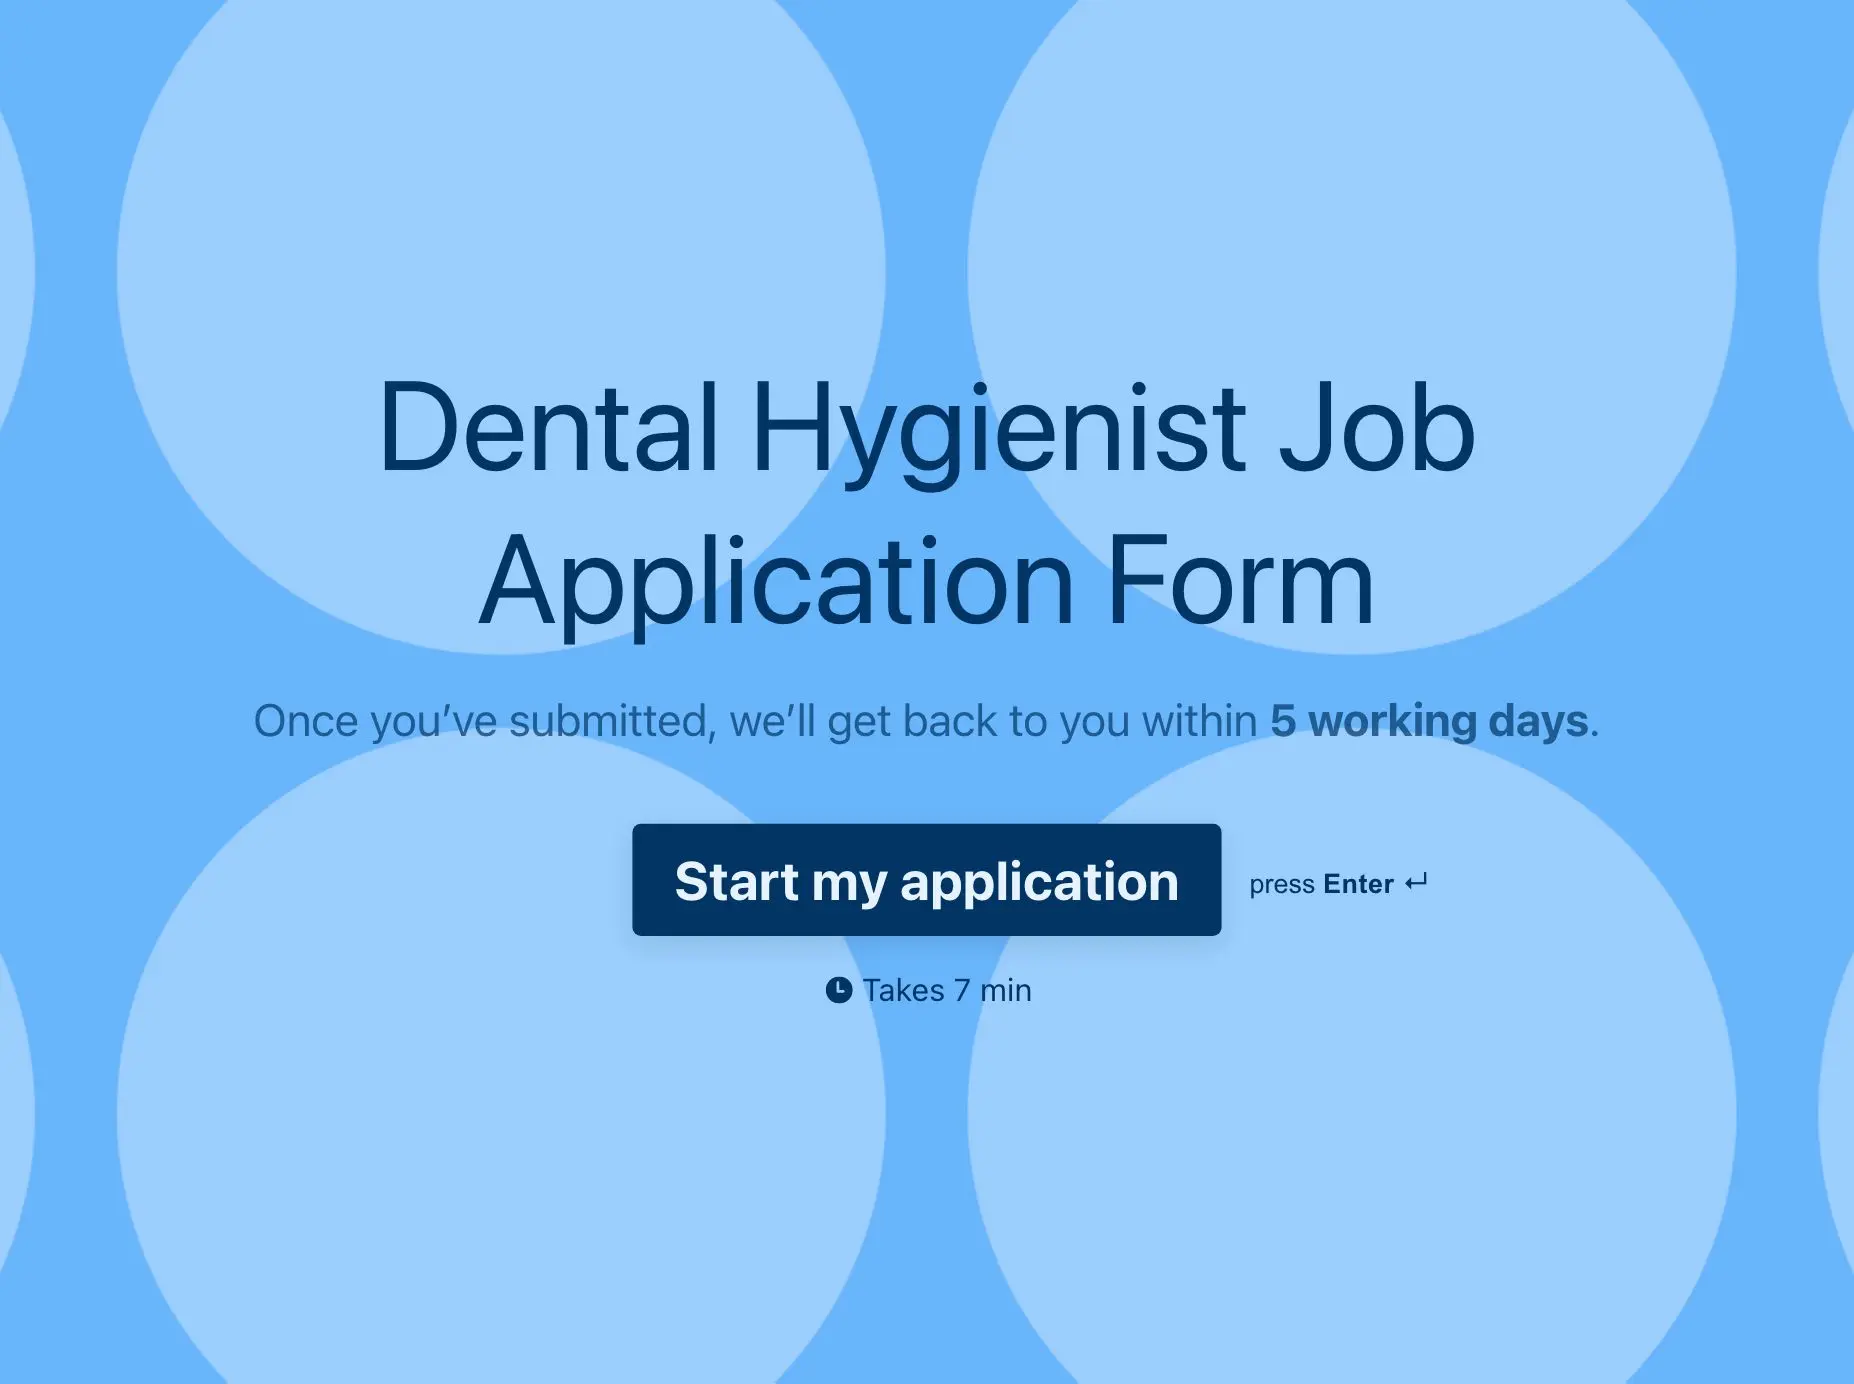 Dental Hygienist Job Application Form Template Hero